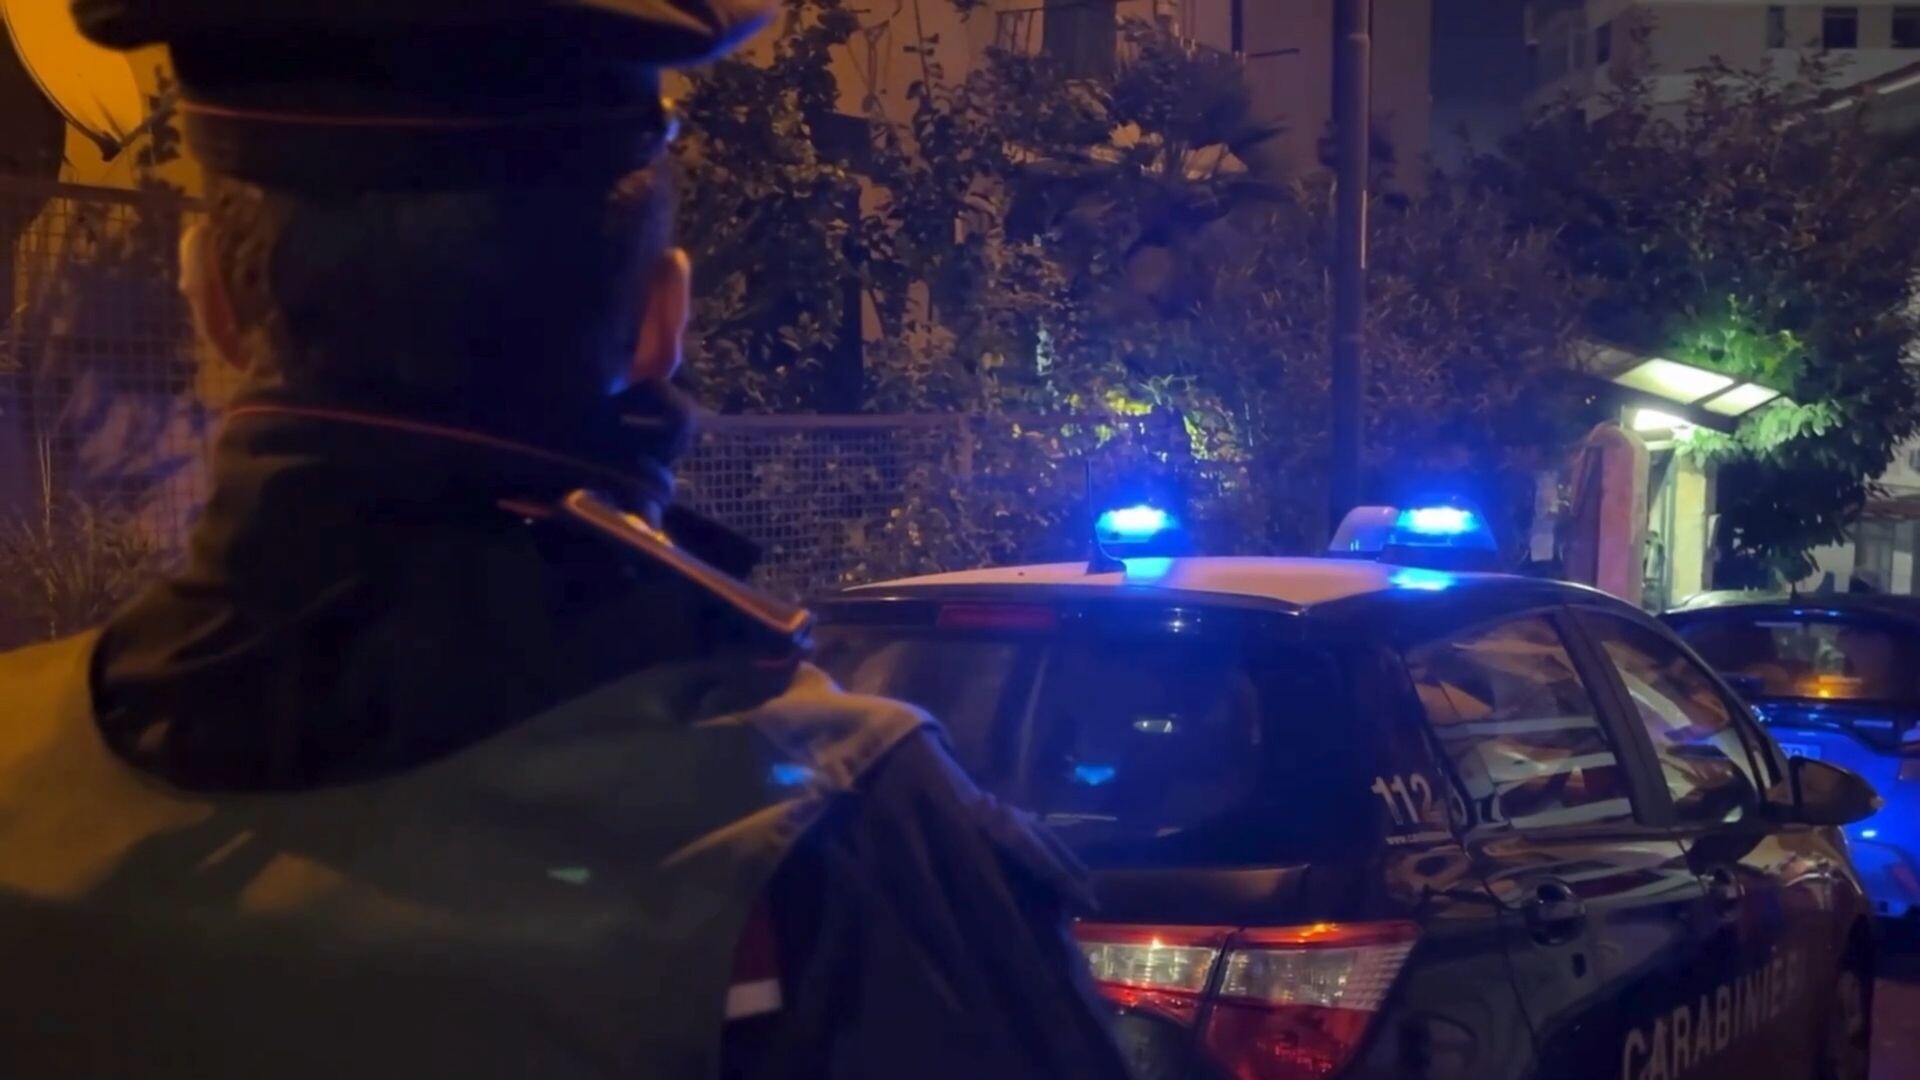 Napoli, narcotraffico da Olanda e Spagna: 29 misure cautelari